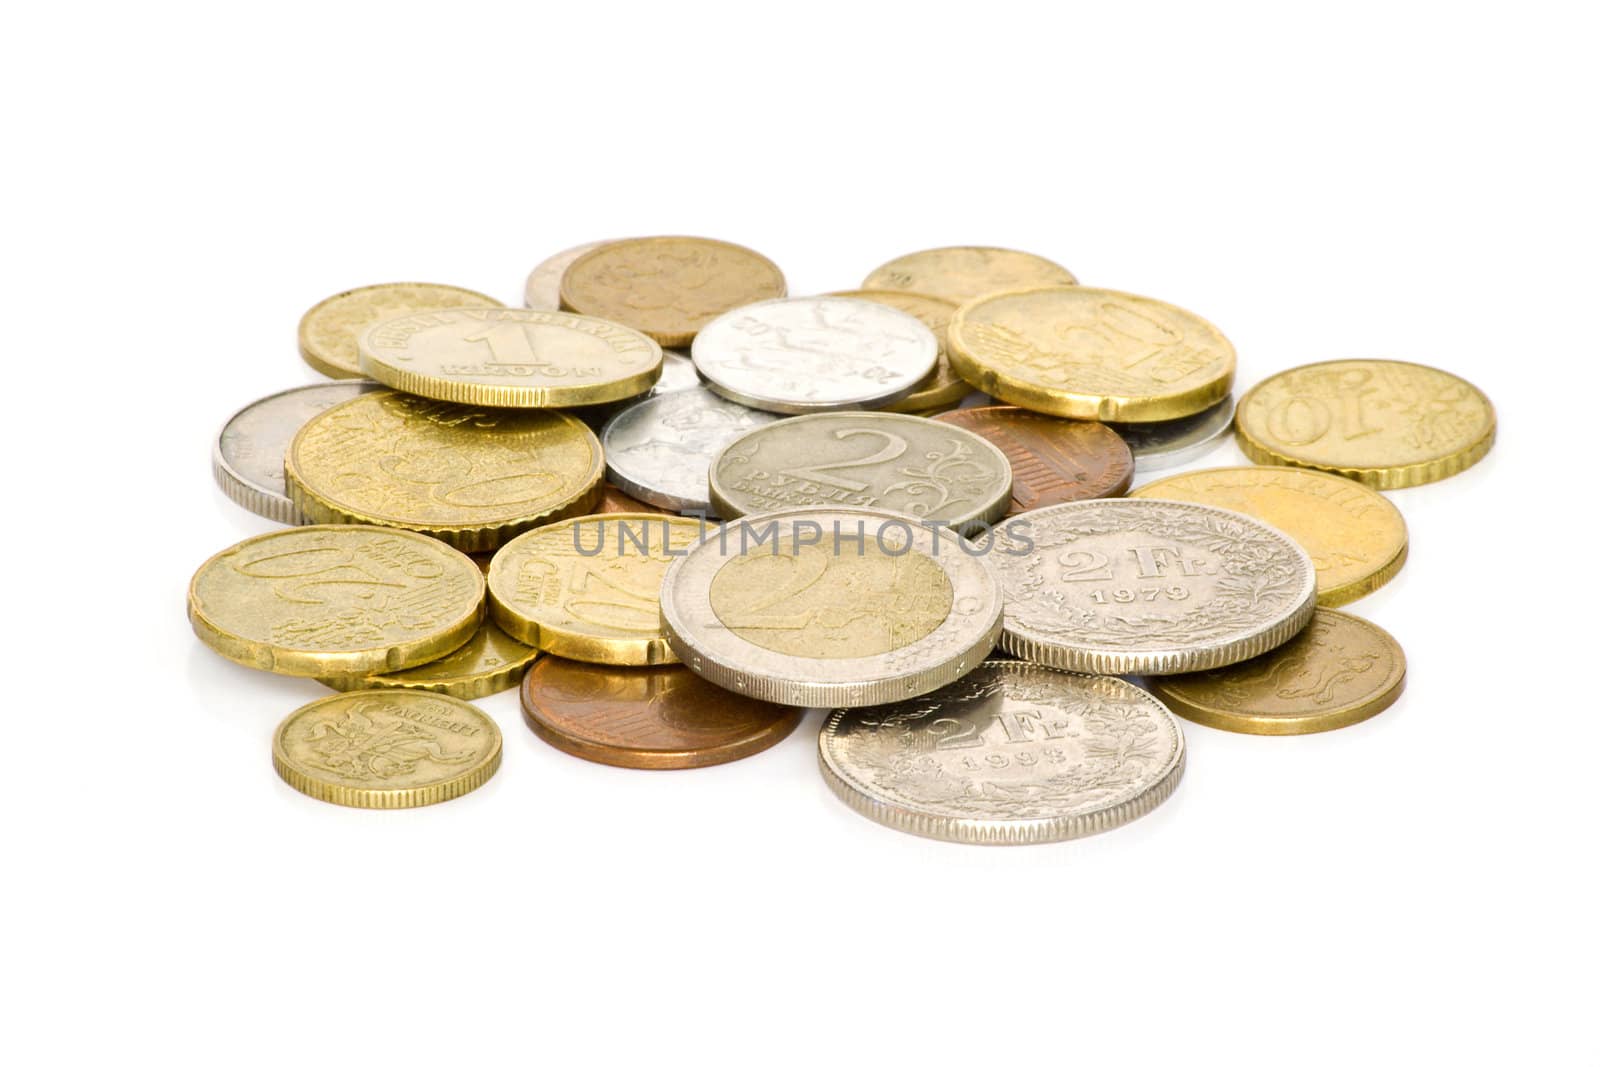 Coins by Dan70